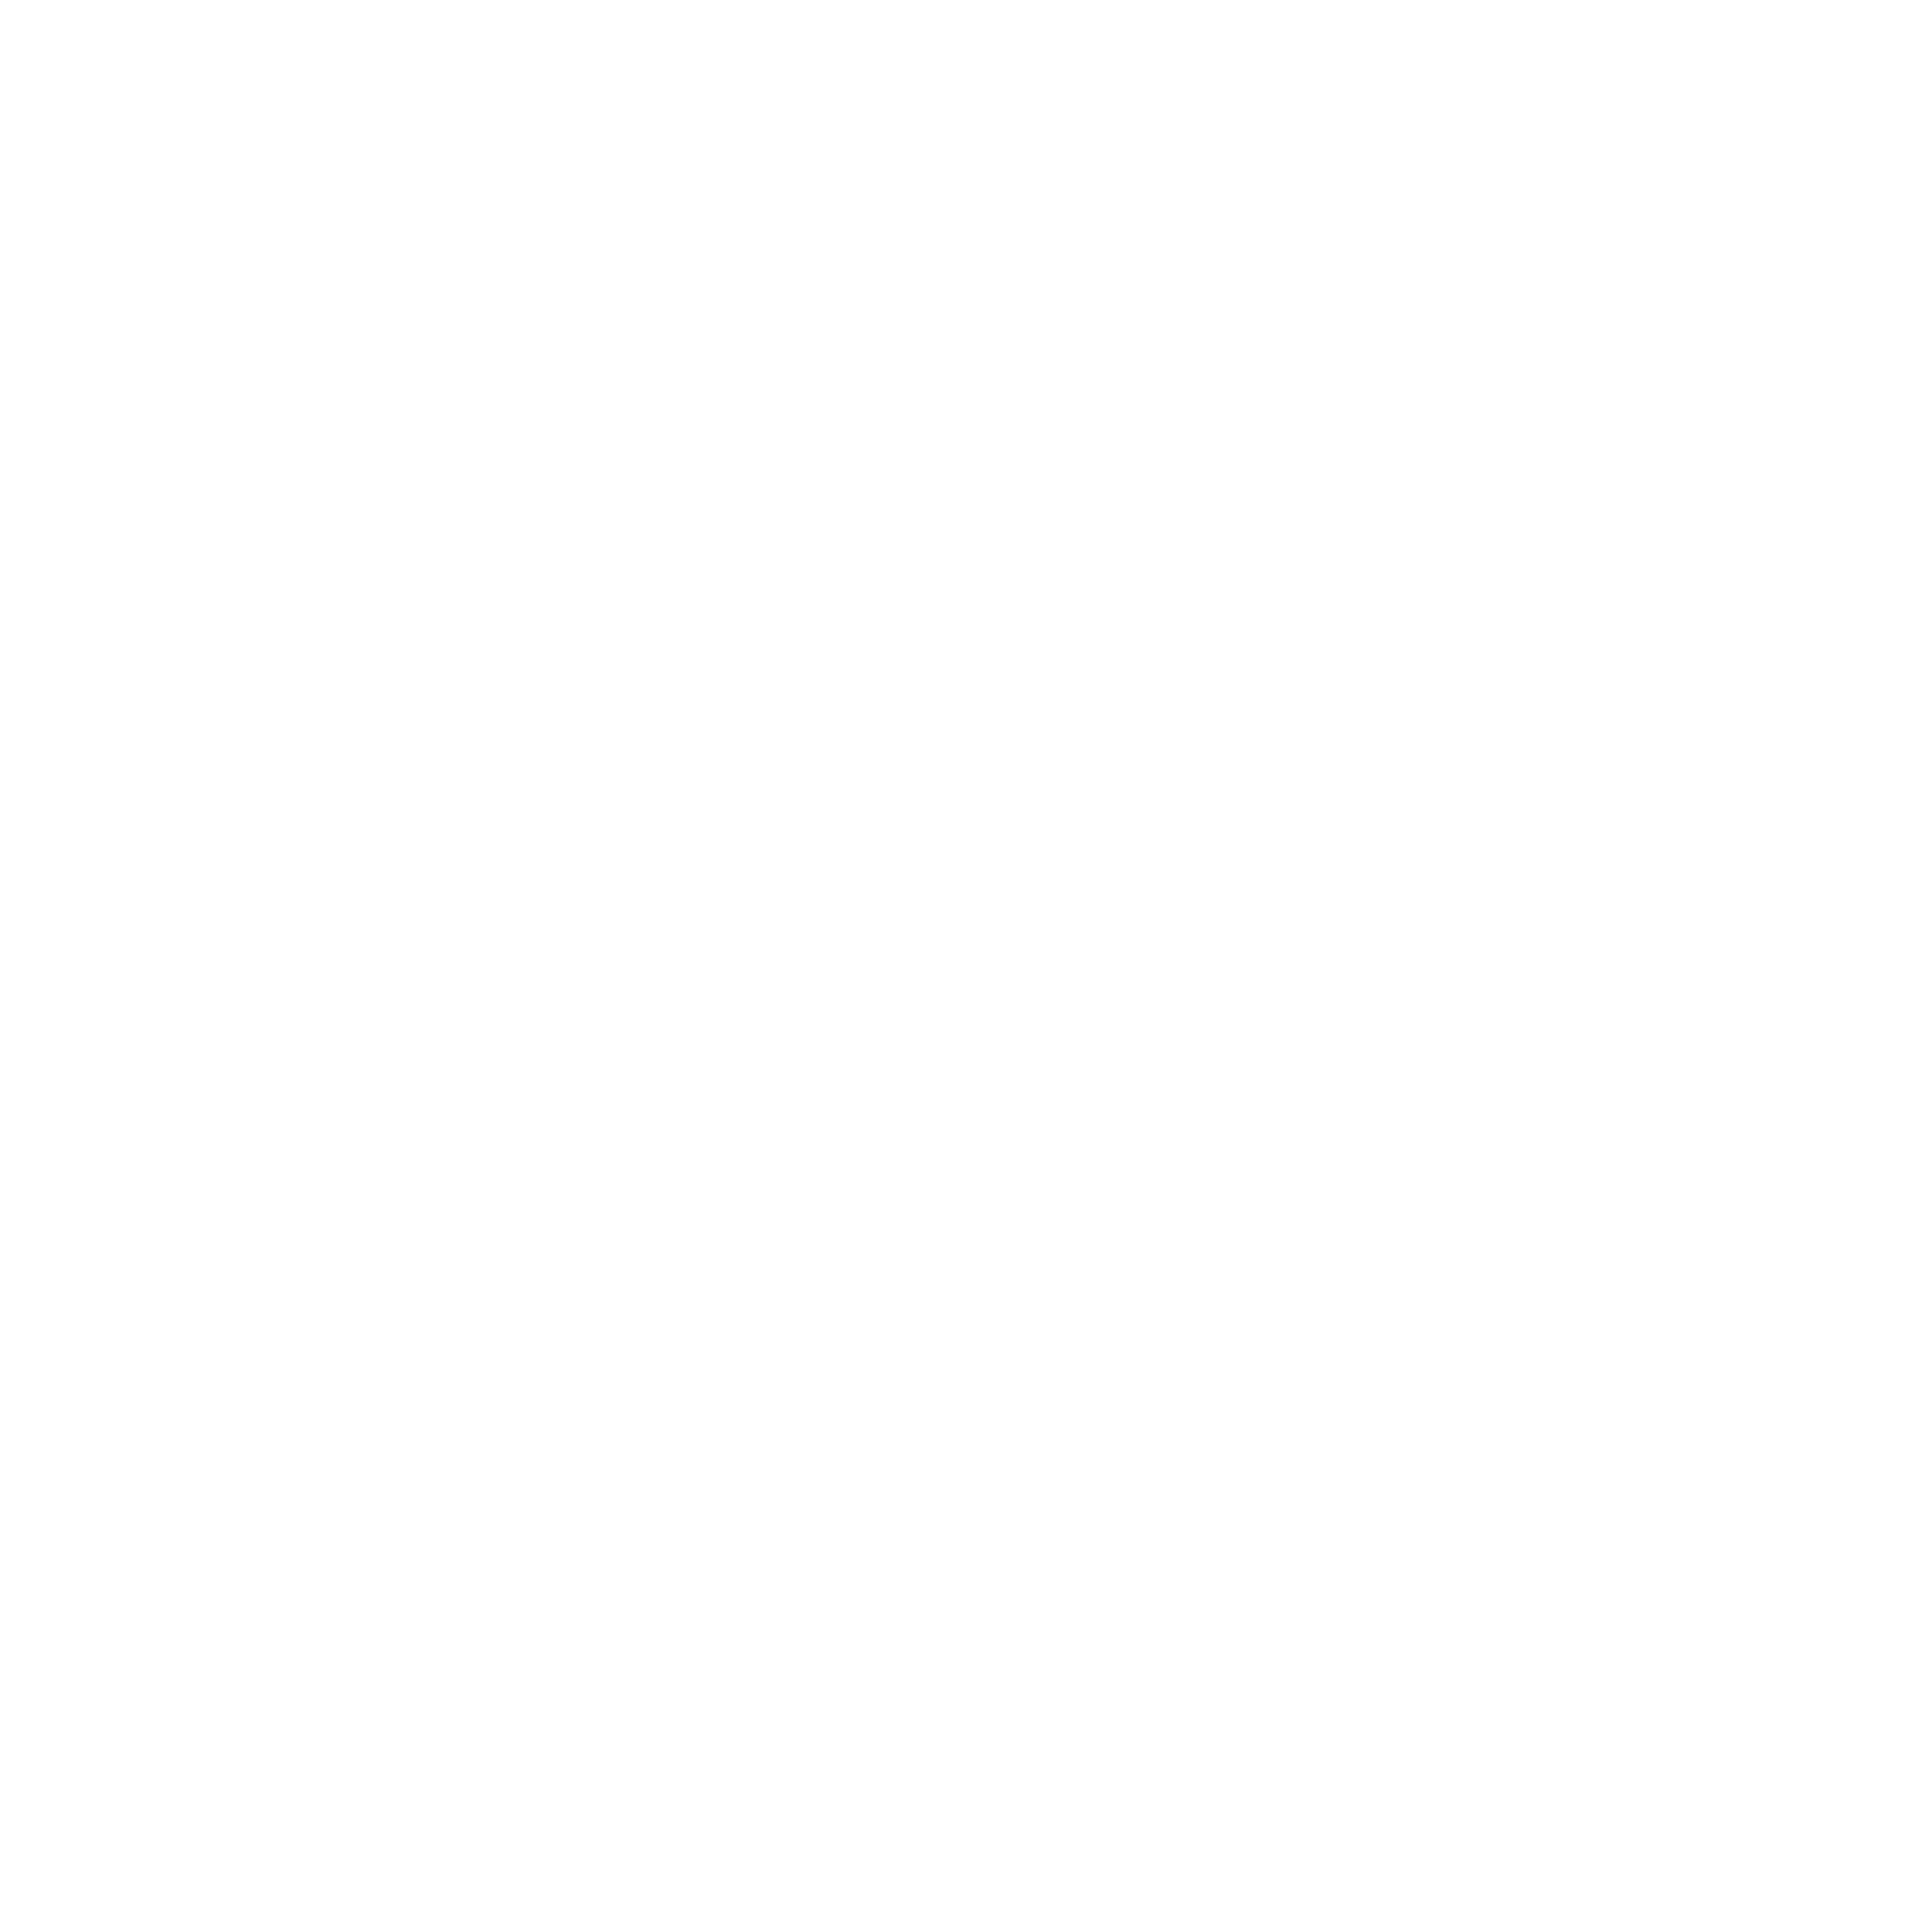 EXMO Cryptocurrency icon